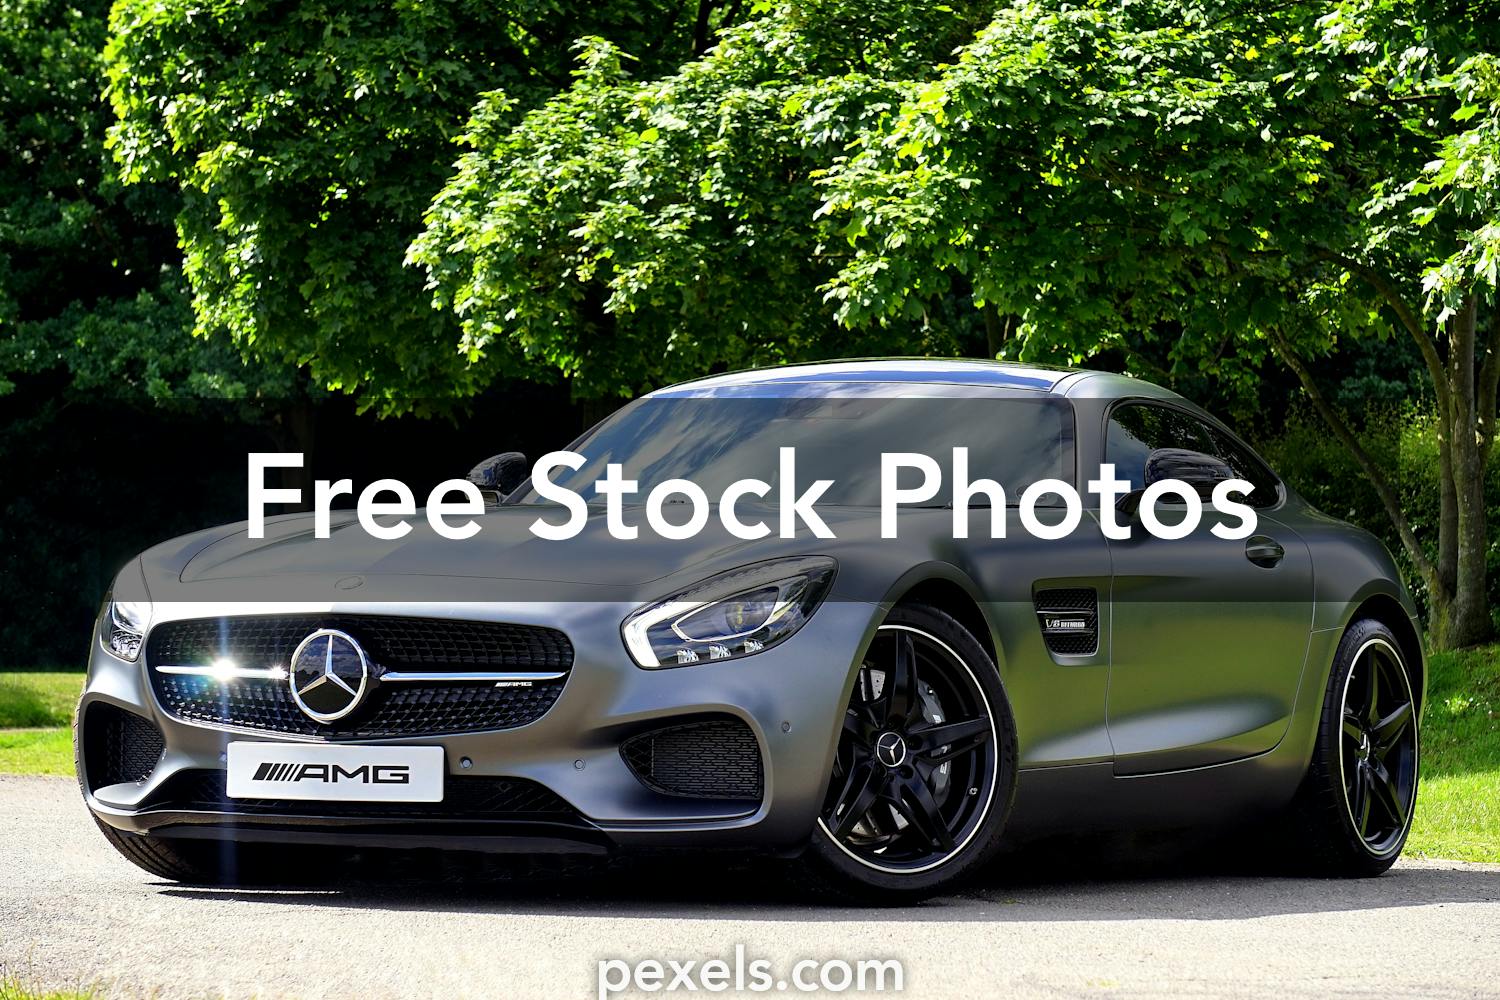 1000 Amazing Sports Car Photos Pexels Free Stock Photos